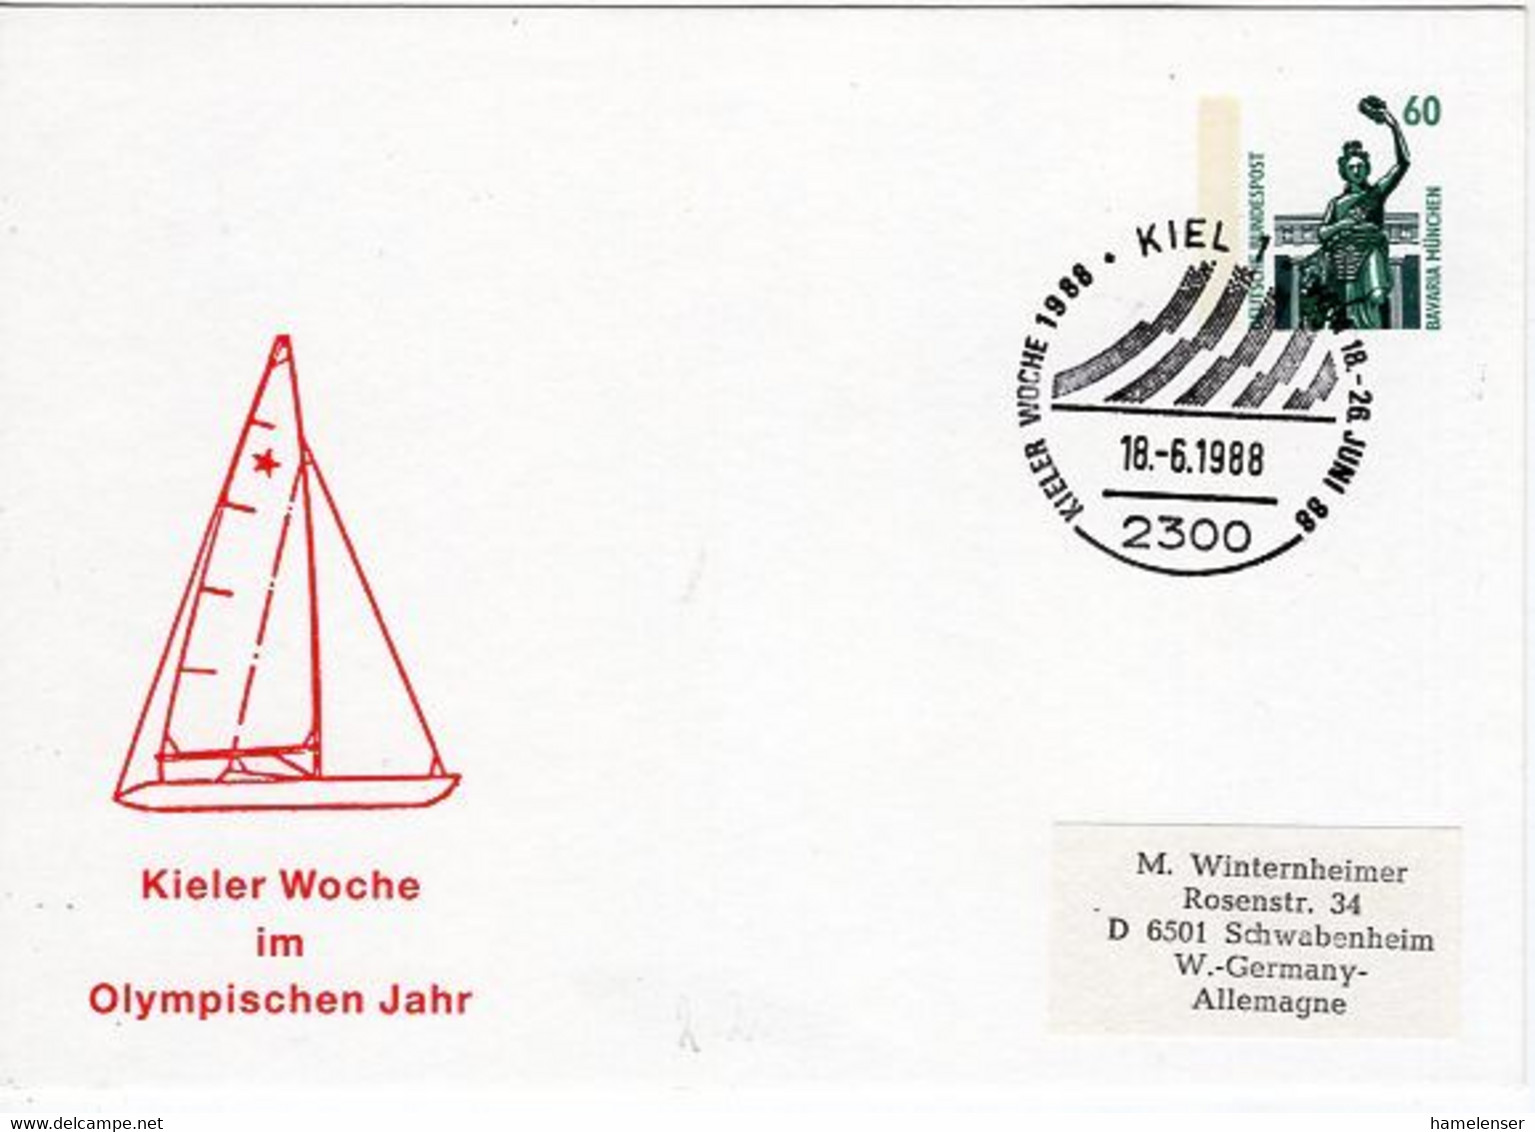 53704 - Bund - 1988 - 60Pfg SWK PGAKte "Kieler Woche" SoStpl KIEL - KIELER WOCHE -> Schwabenheim - Sailing